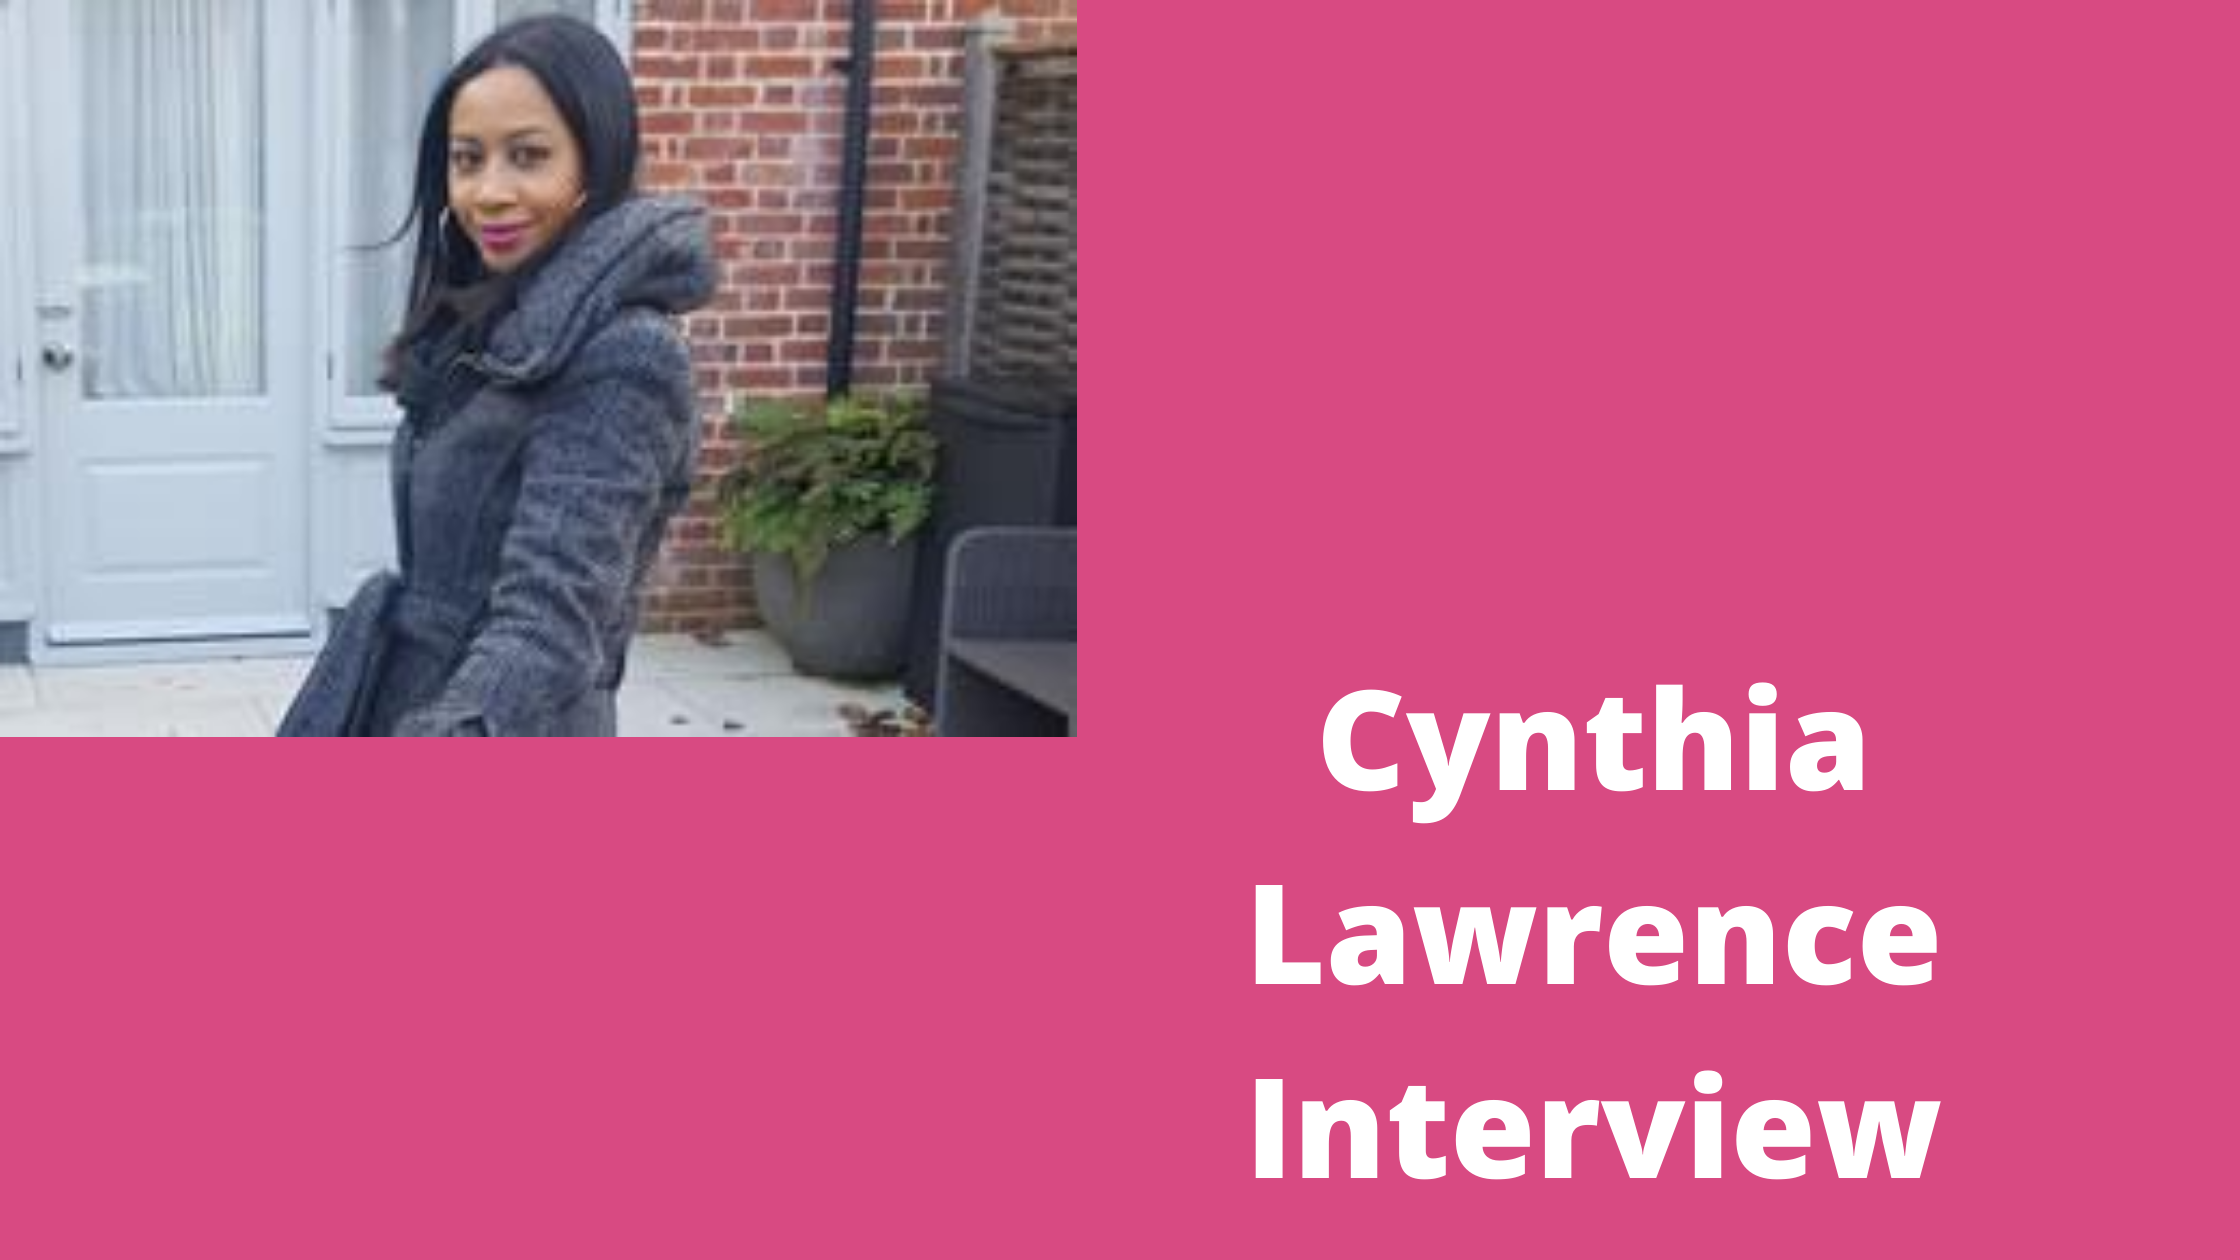 cynthia lawrence interview freelance writer